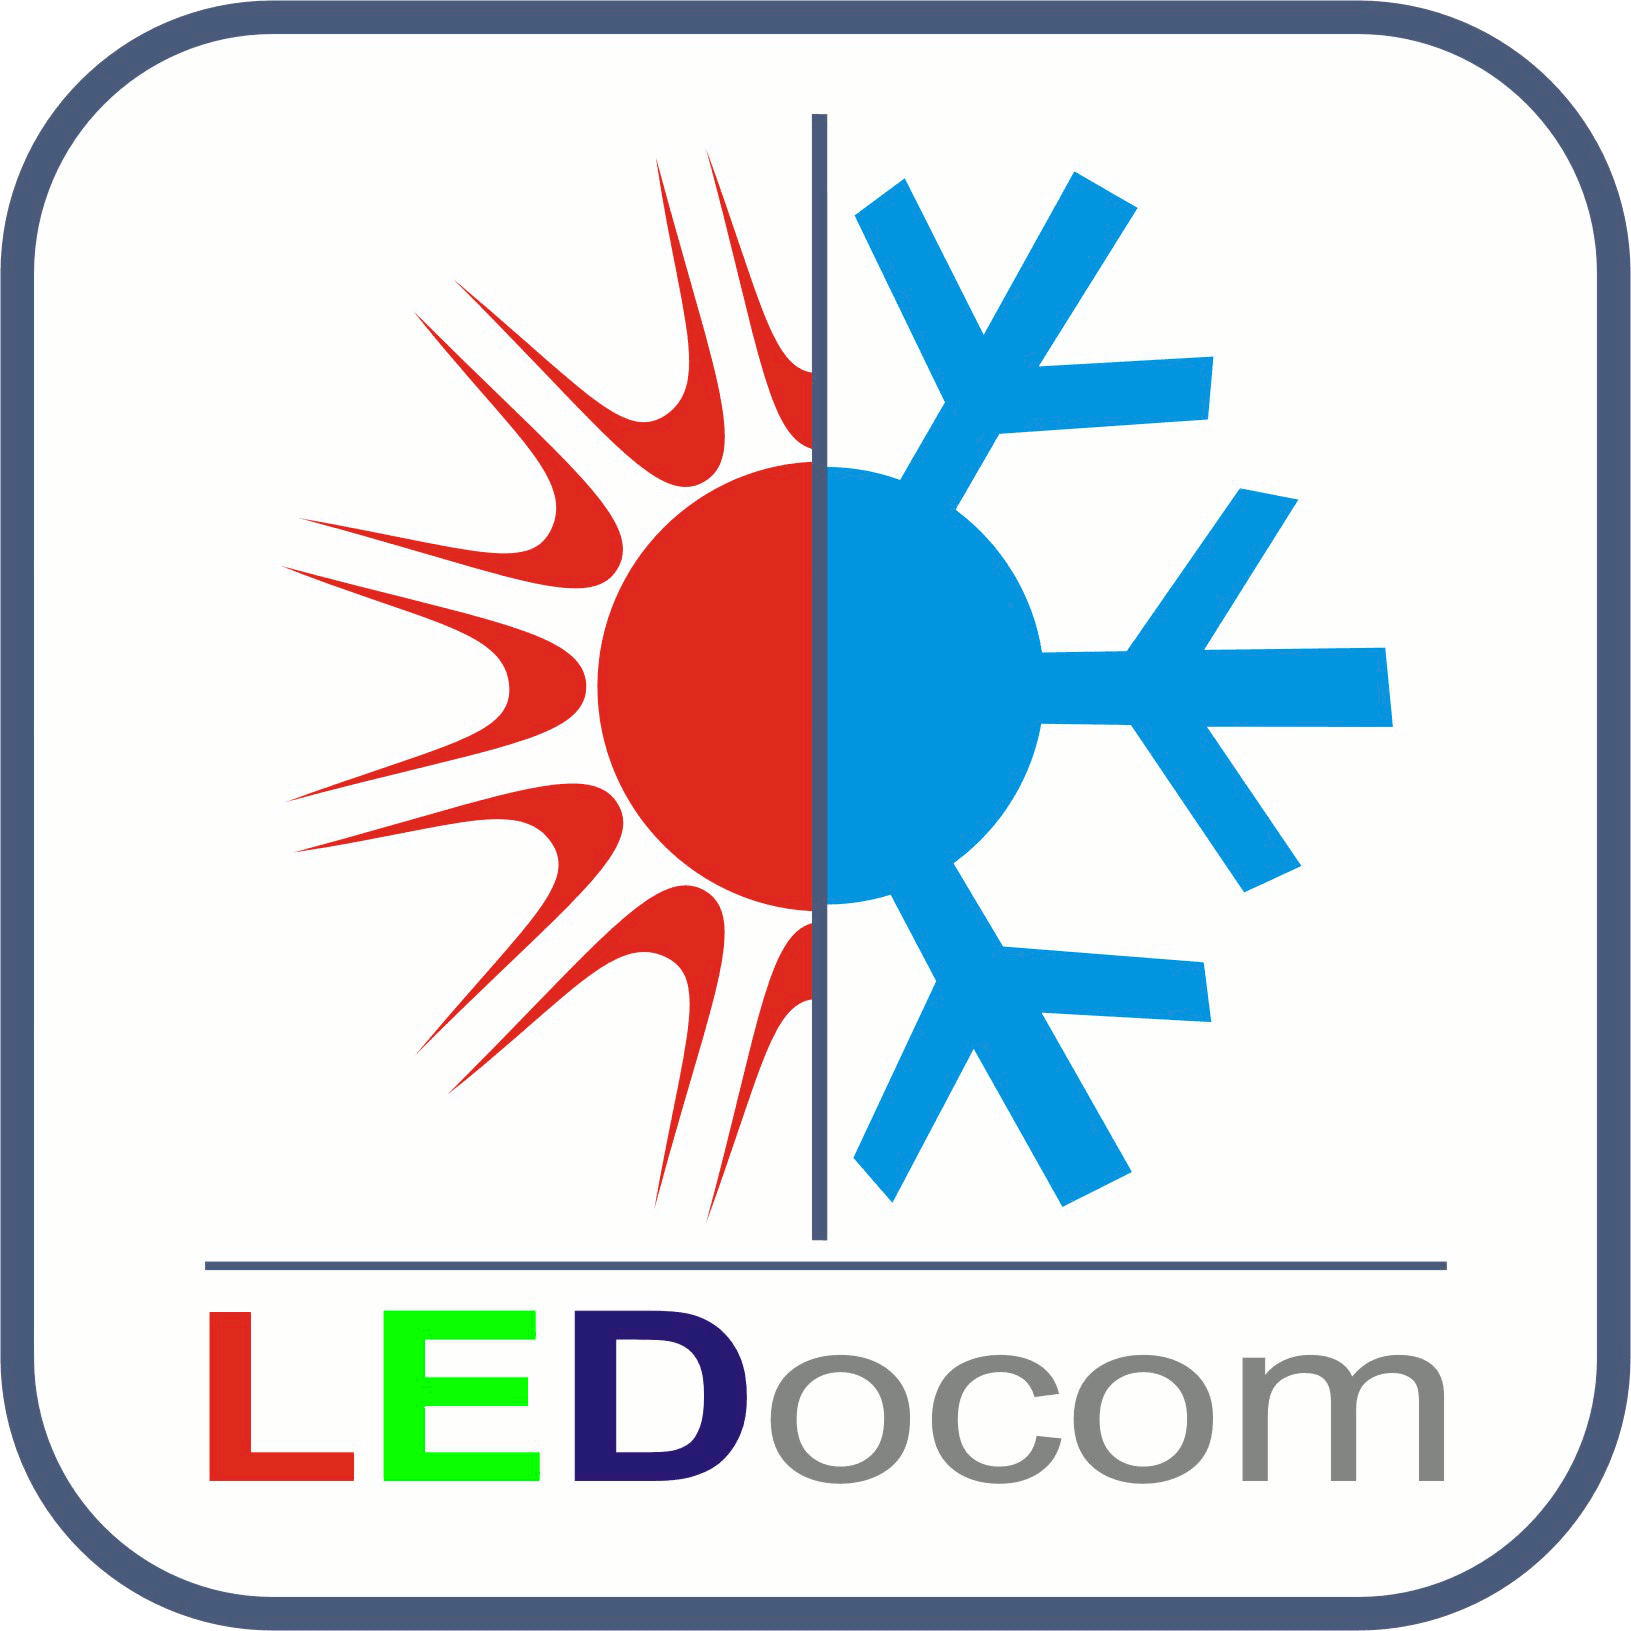 logo Ledocom